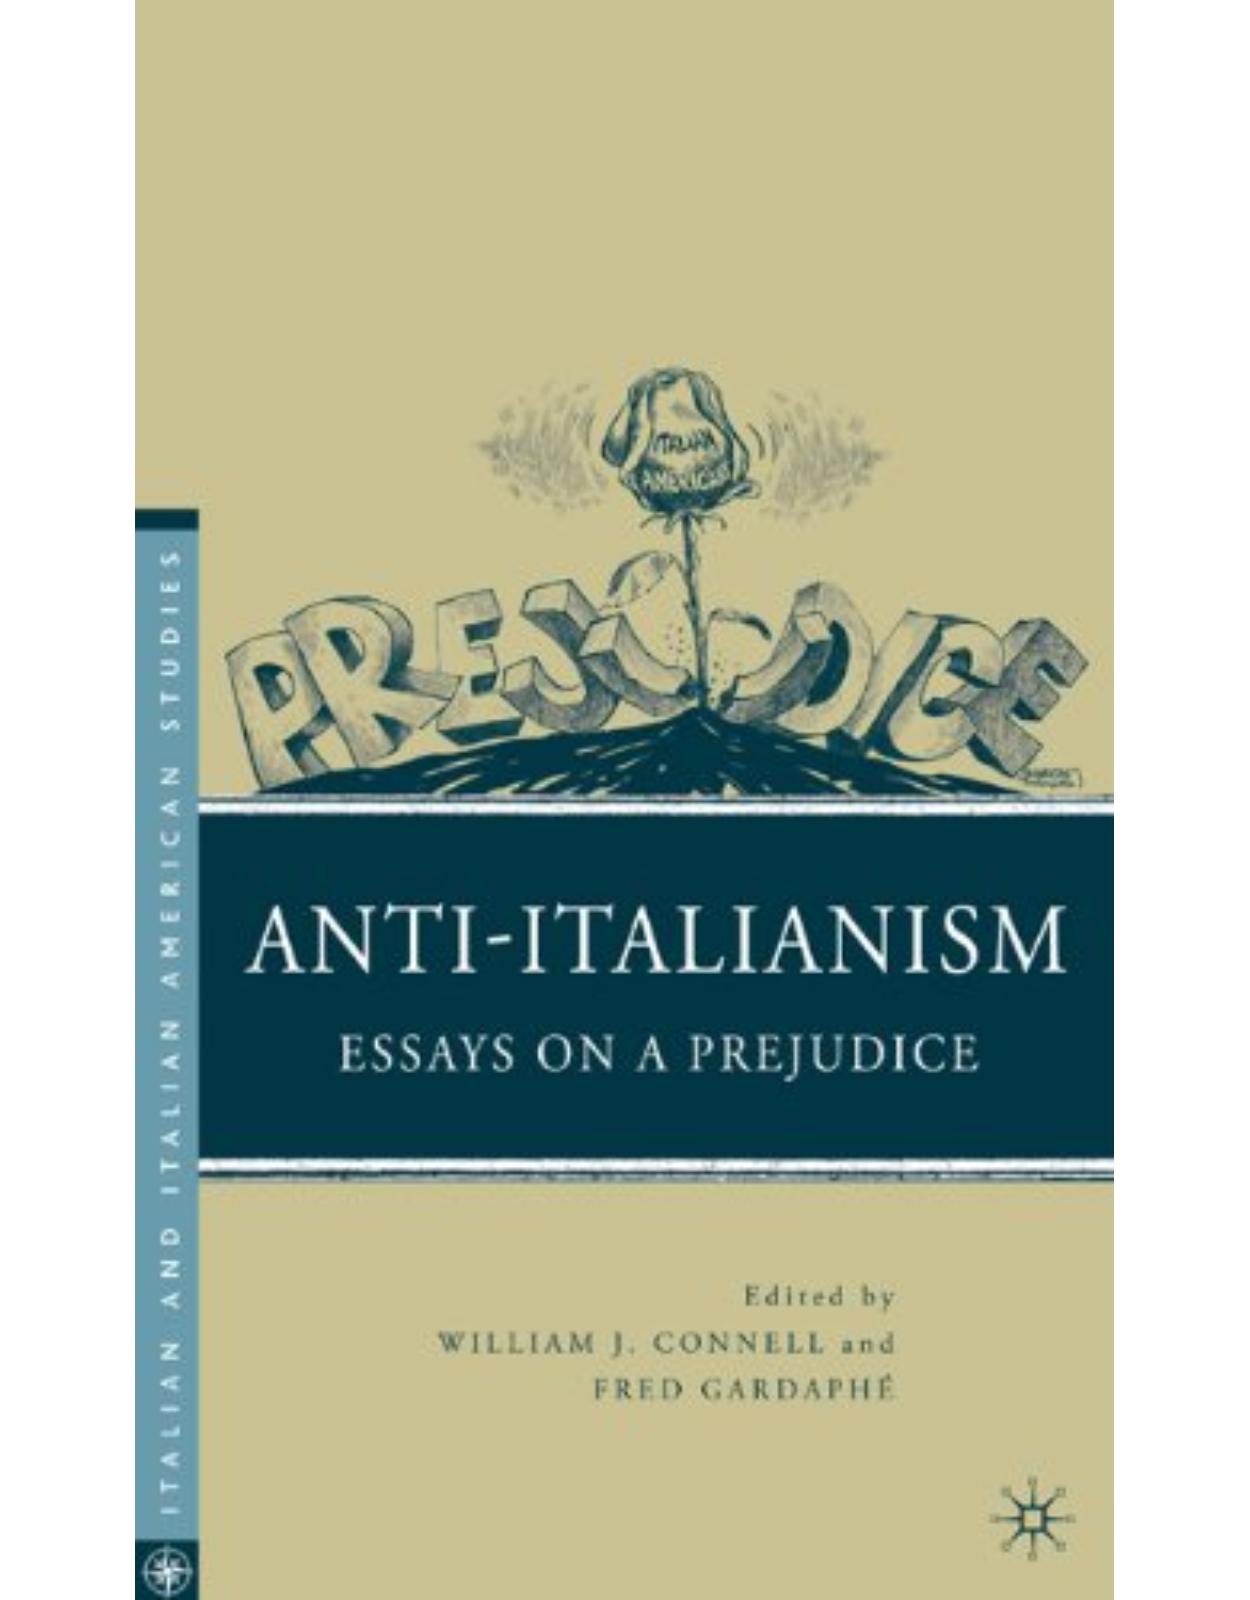 Anti-Italianism: Essays on a Prejudice (Italian and Italian American Studies)